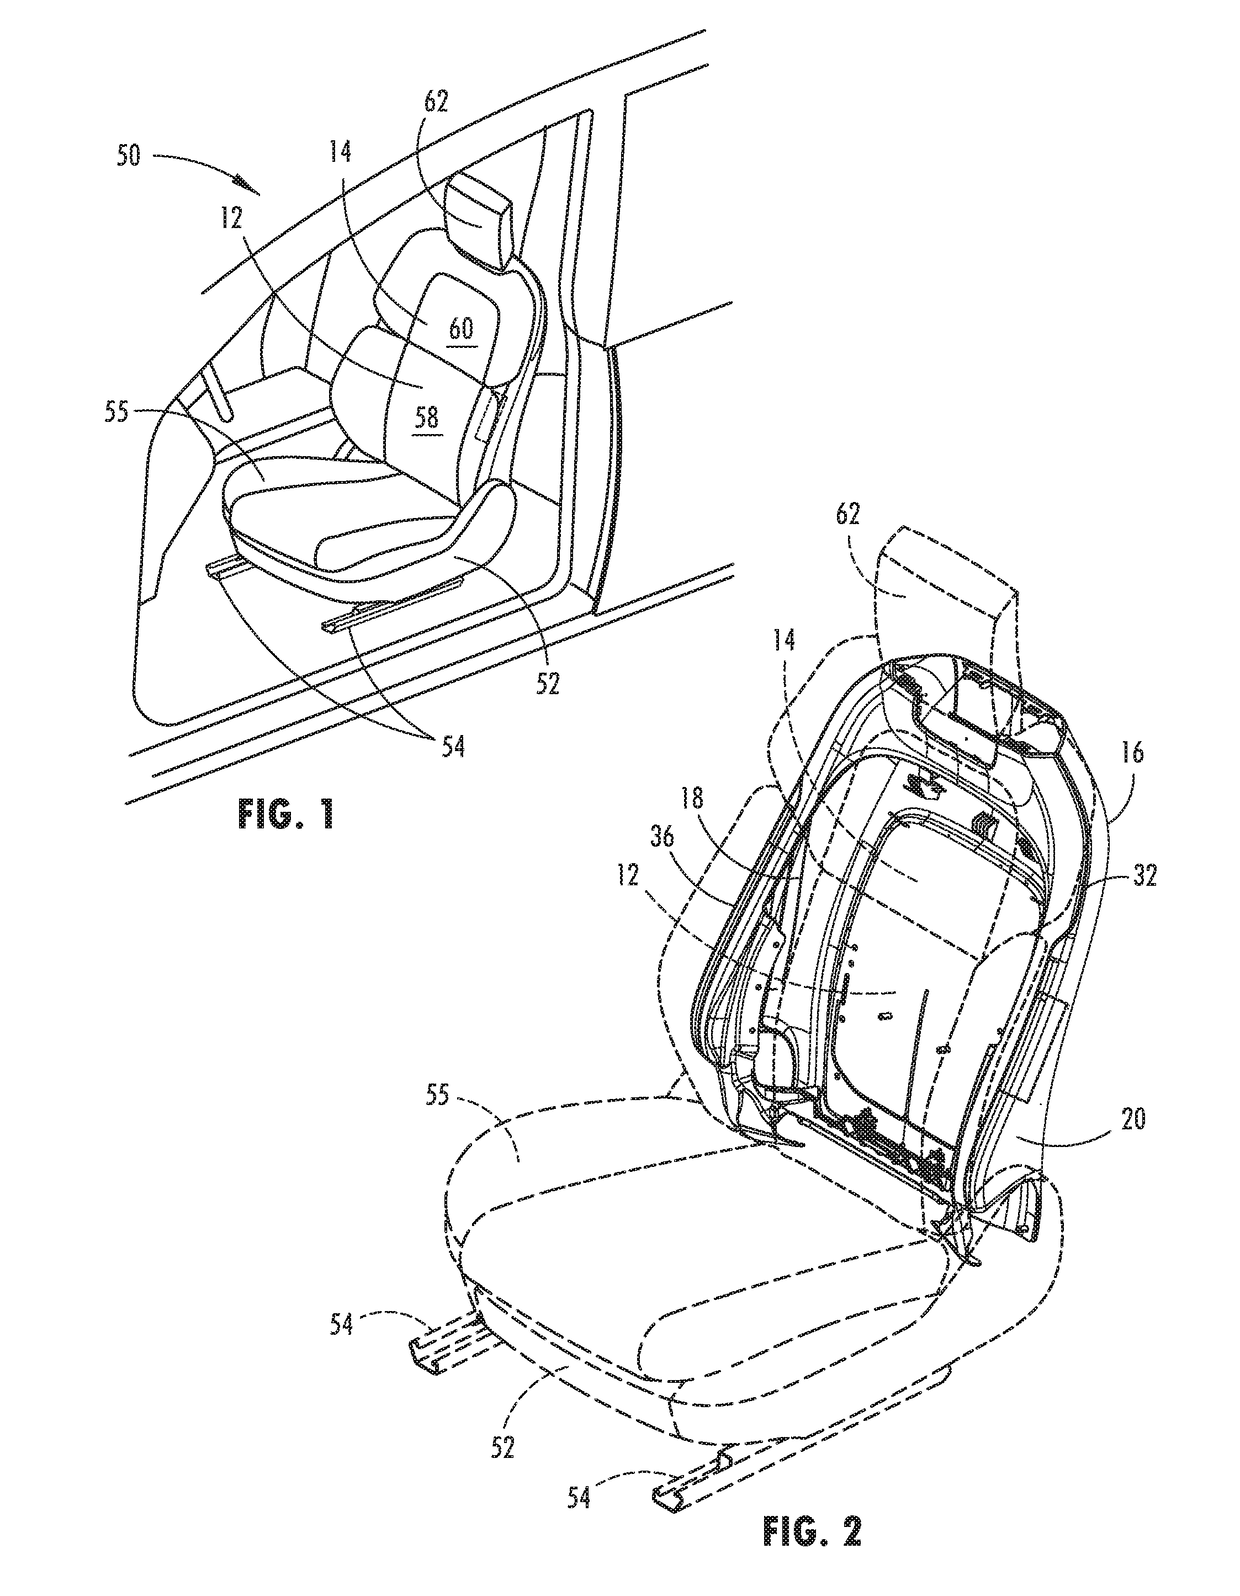 Seatback flexible slip plane joint for side air bag deployment